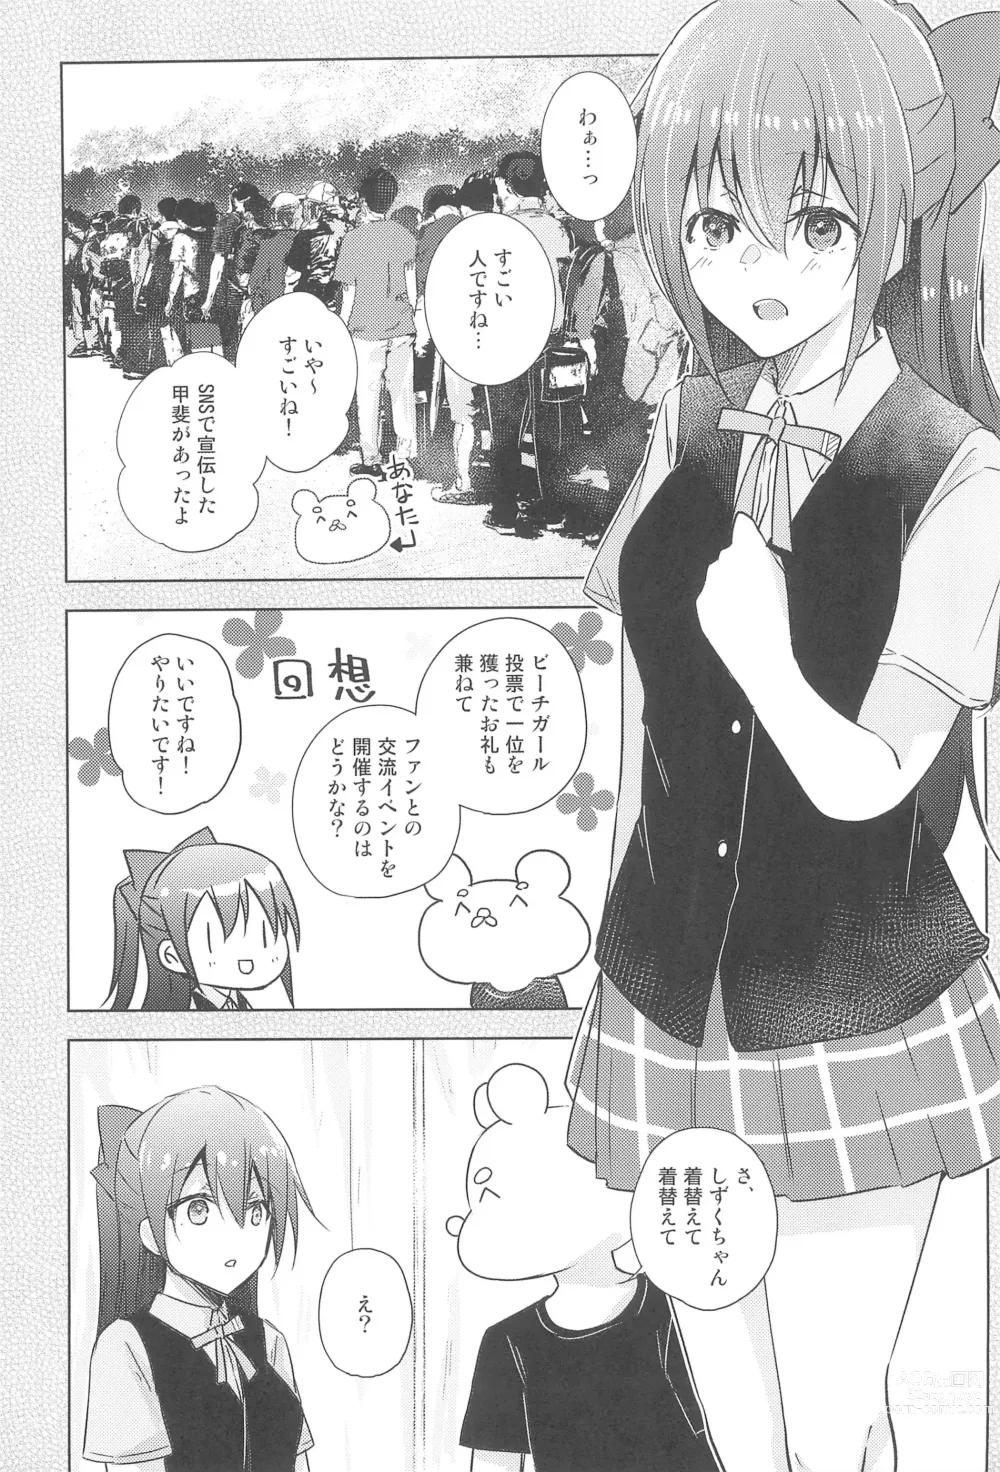 Page 5 of doujinshi Shizuku Fun meets